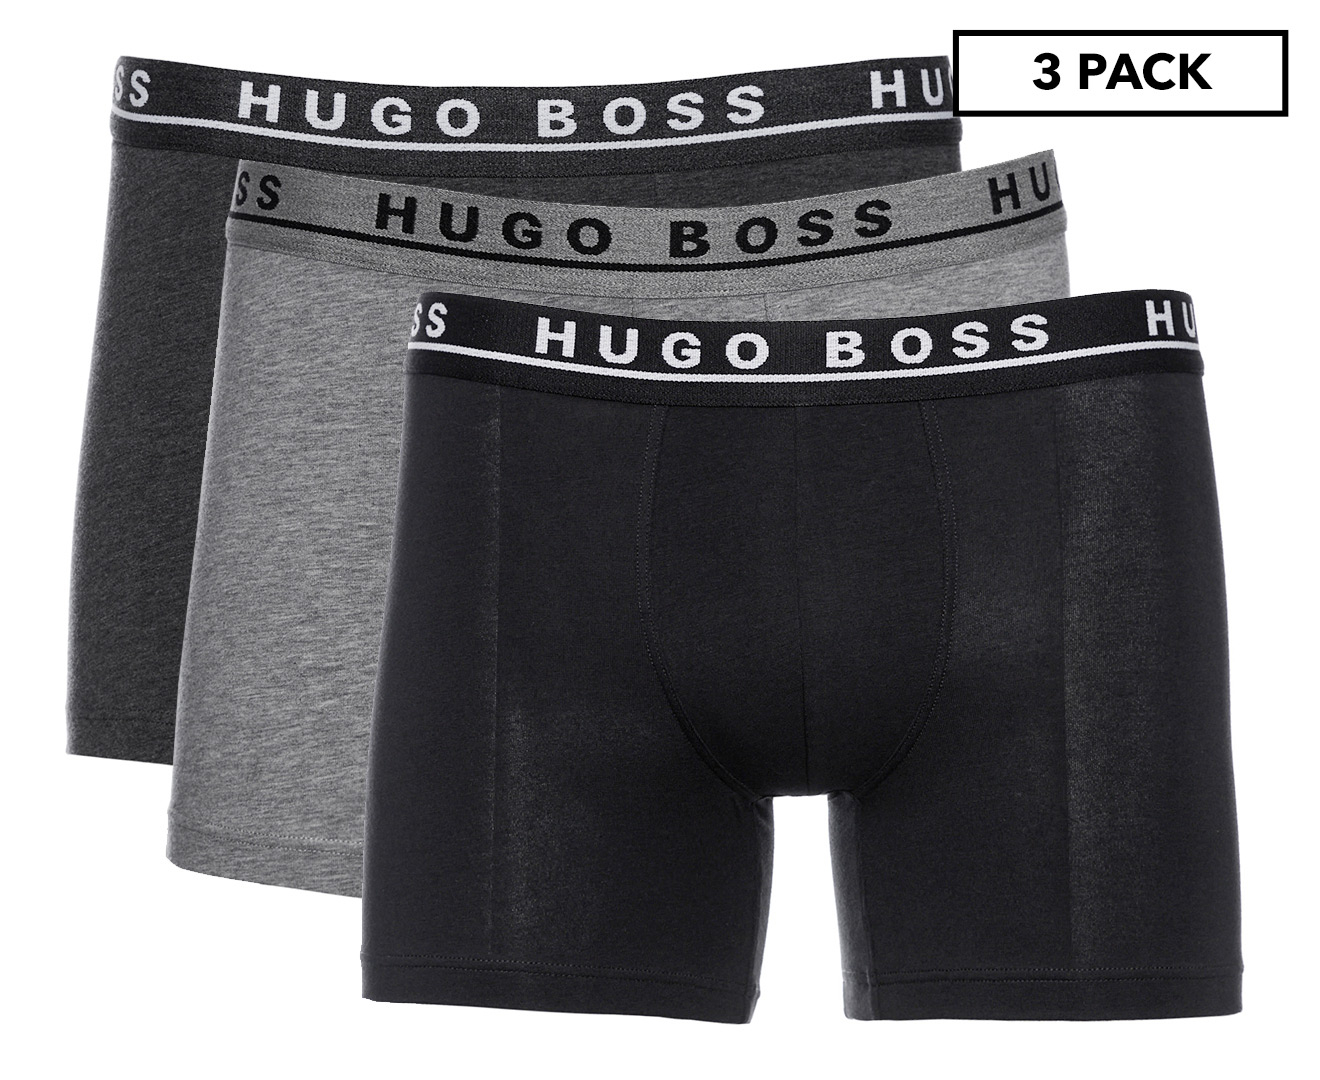 Hugo Boss Cotton Stretch Boxer Briefs 3-Pack - Grey/Charcoal/Black ...